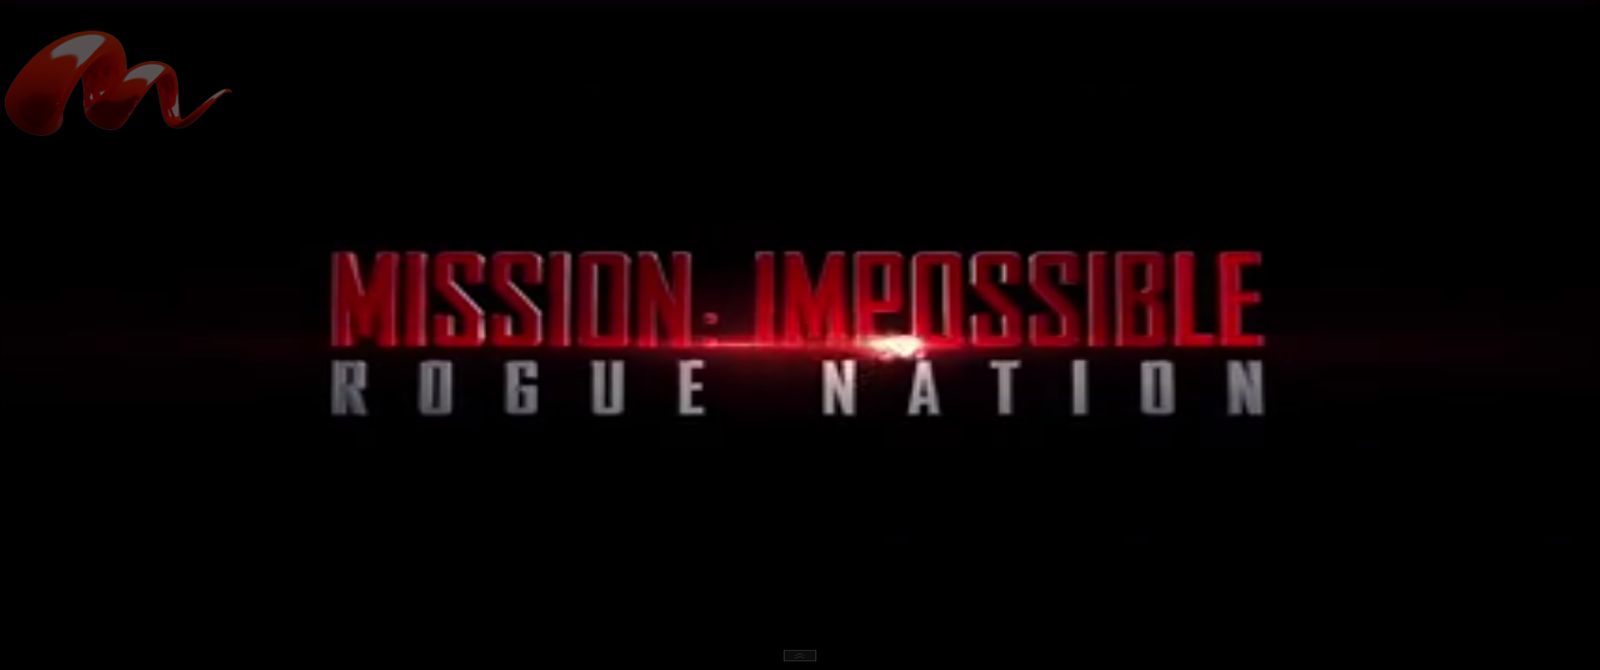 mission impossible 5 netflix